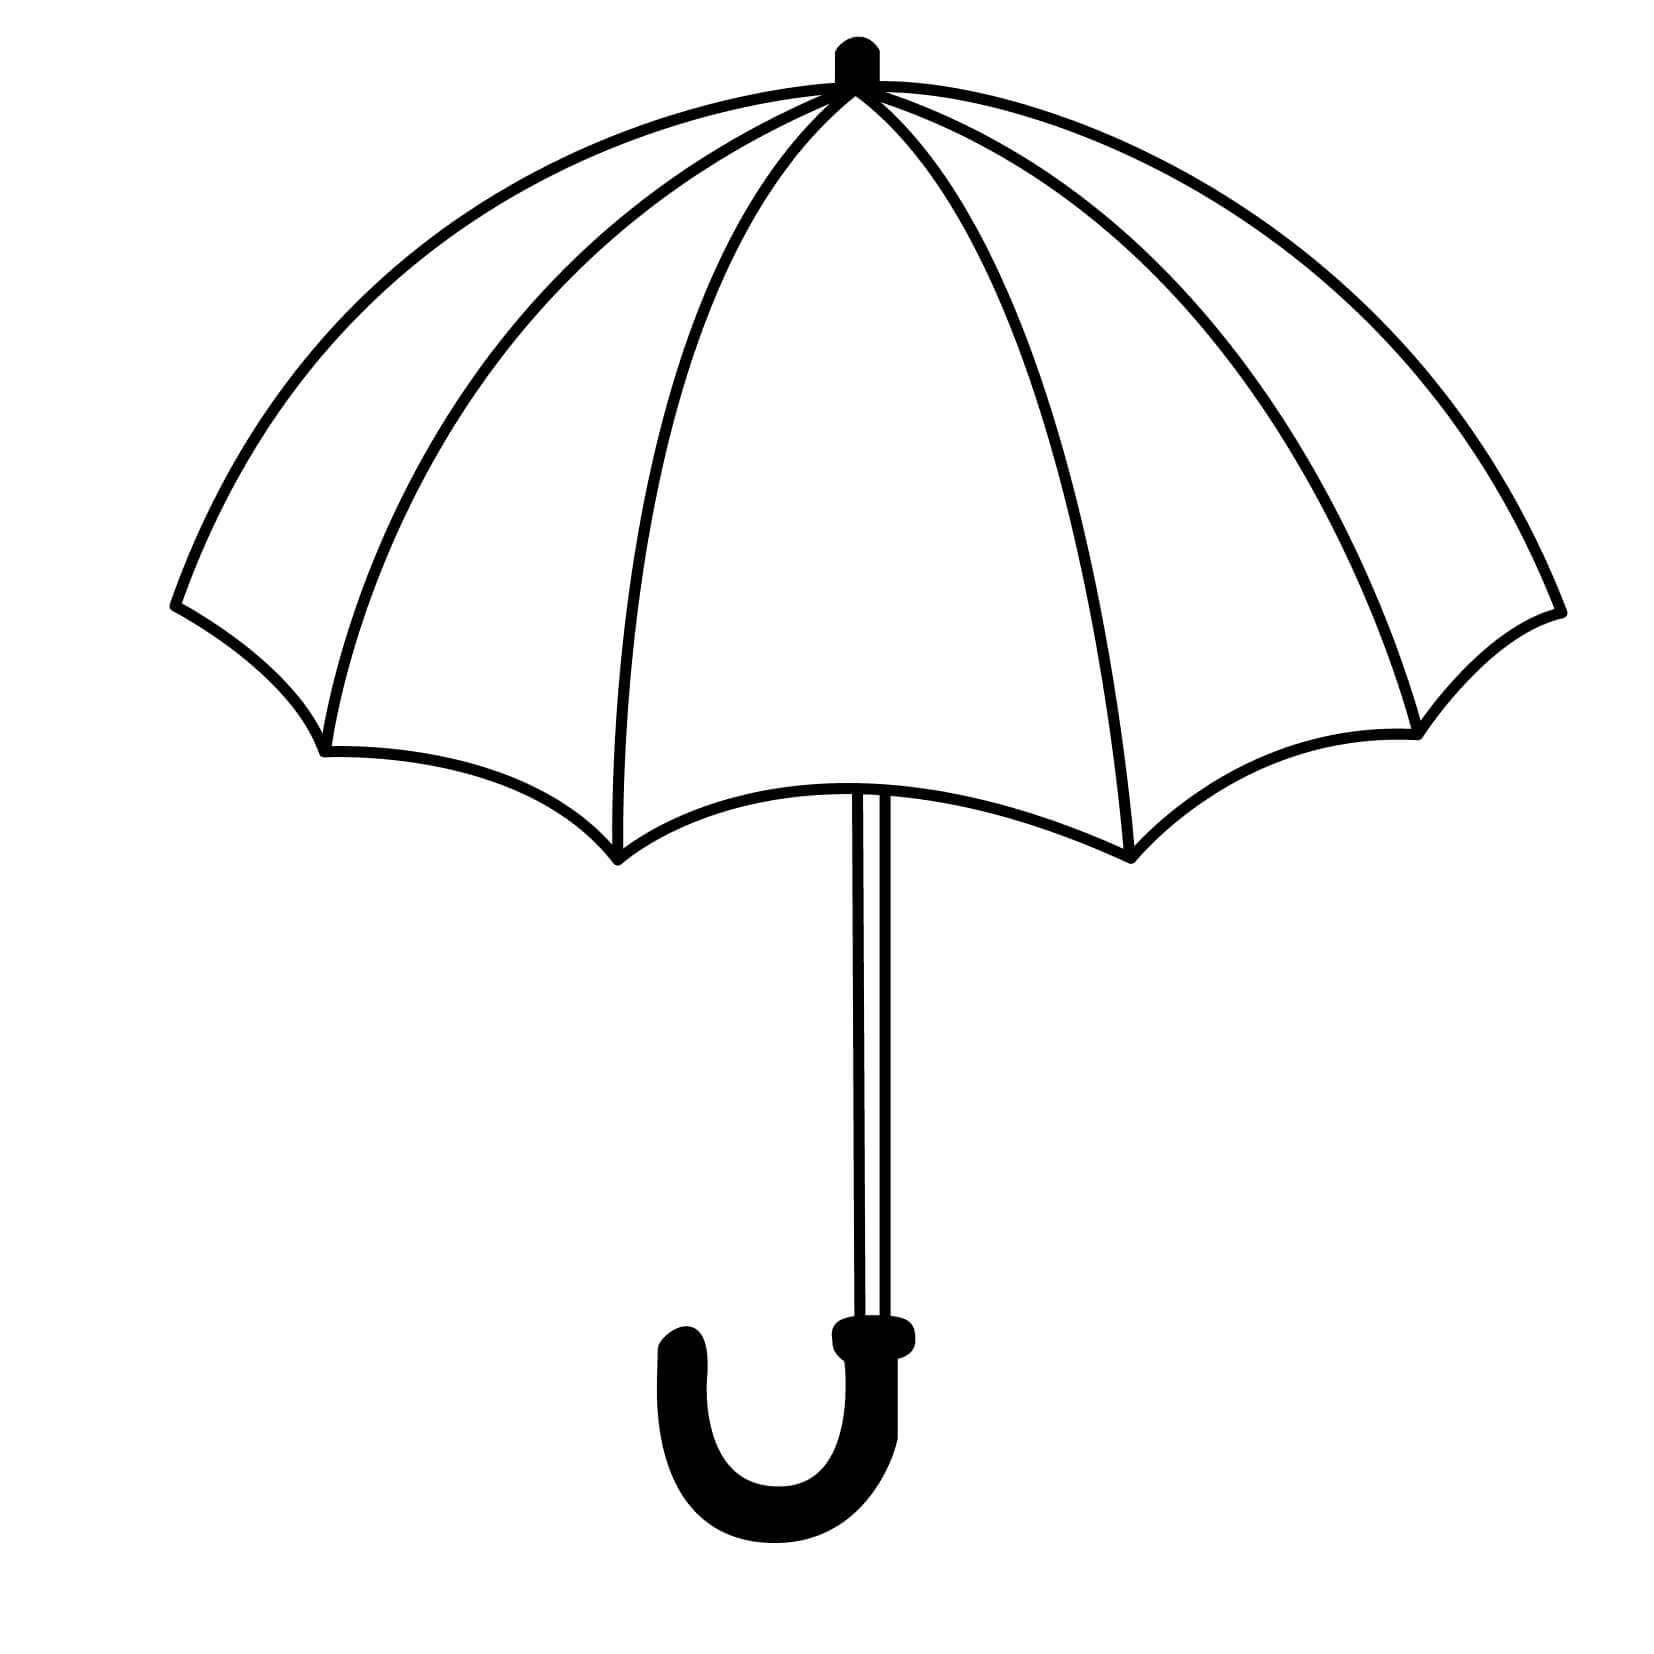 Grande Guarda-chuva para colorir